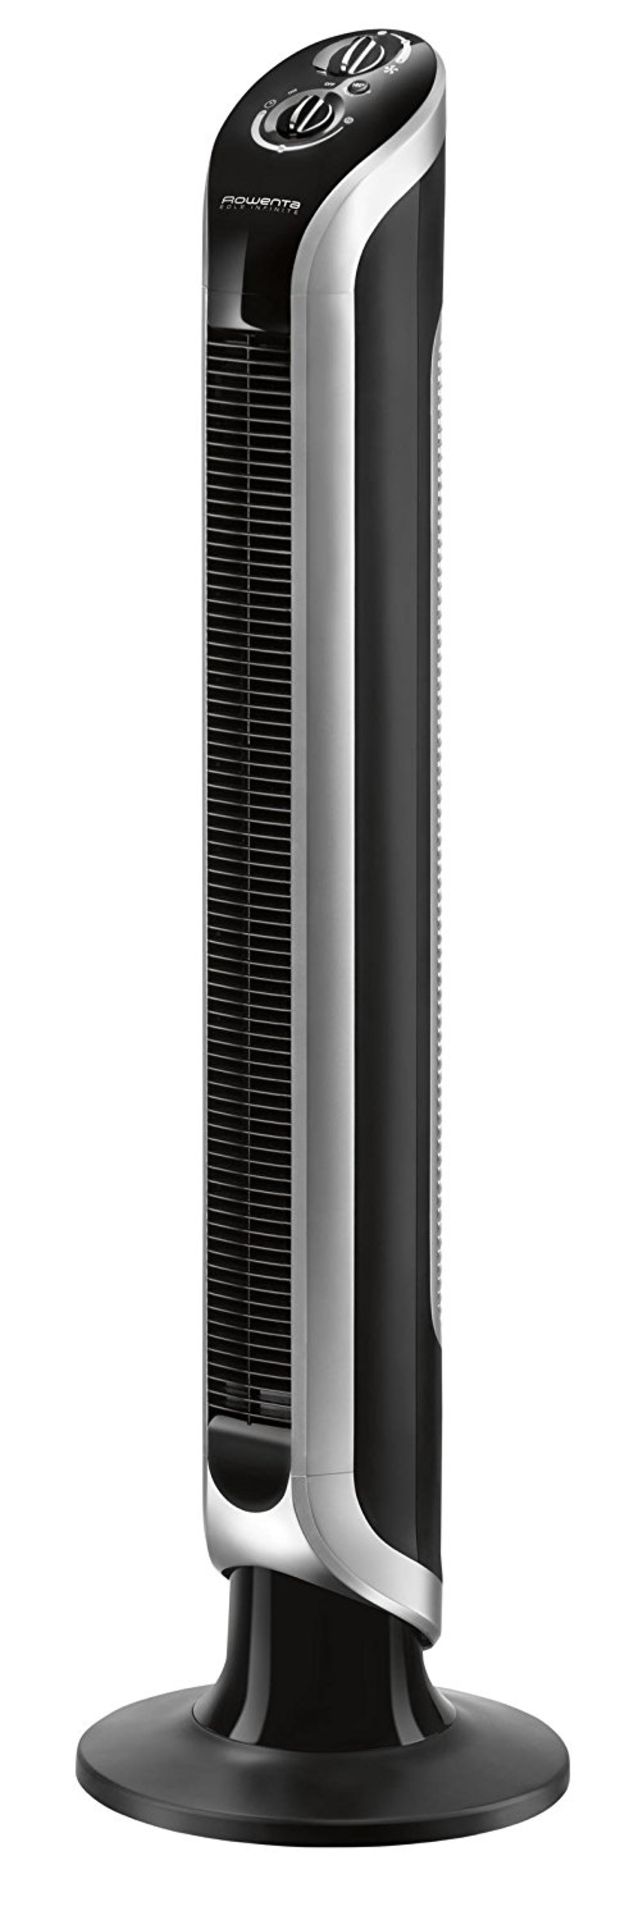 V Brand New Rowenta Eole Infinite Slim Tower Fan Unit - 180 Degrees Oscillation - Timer Function - - Image 2 of 10